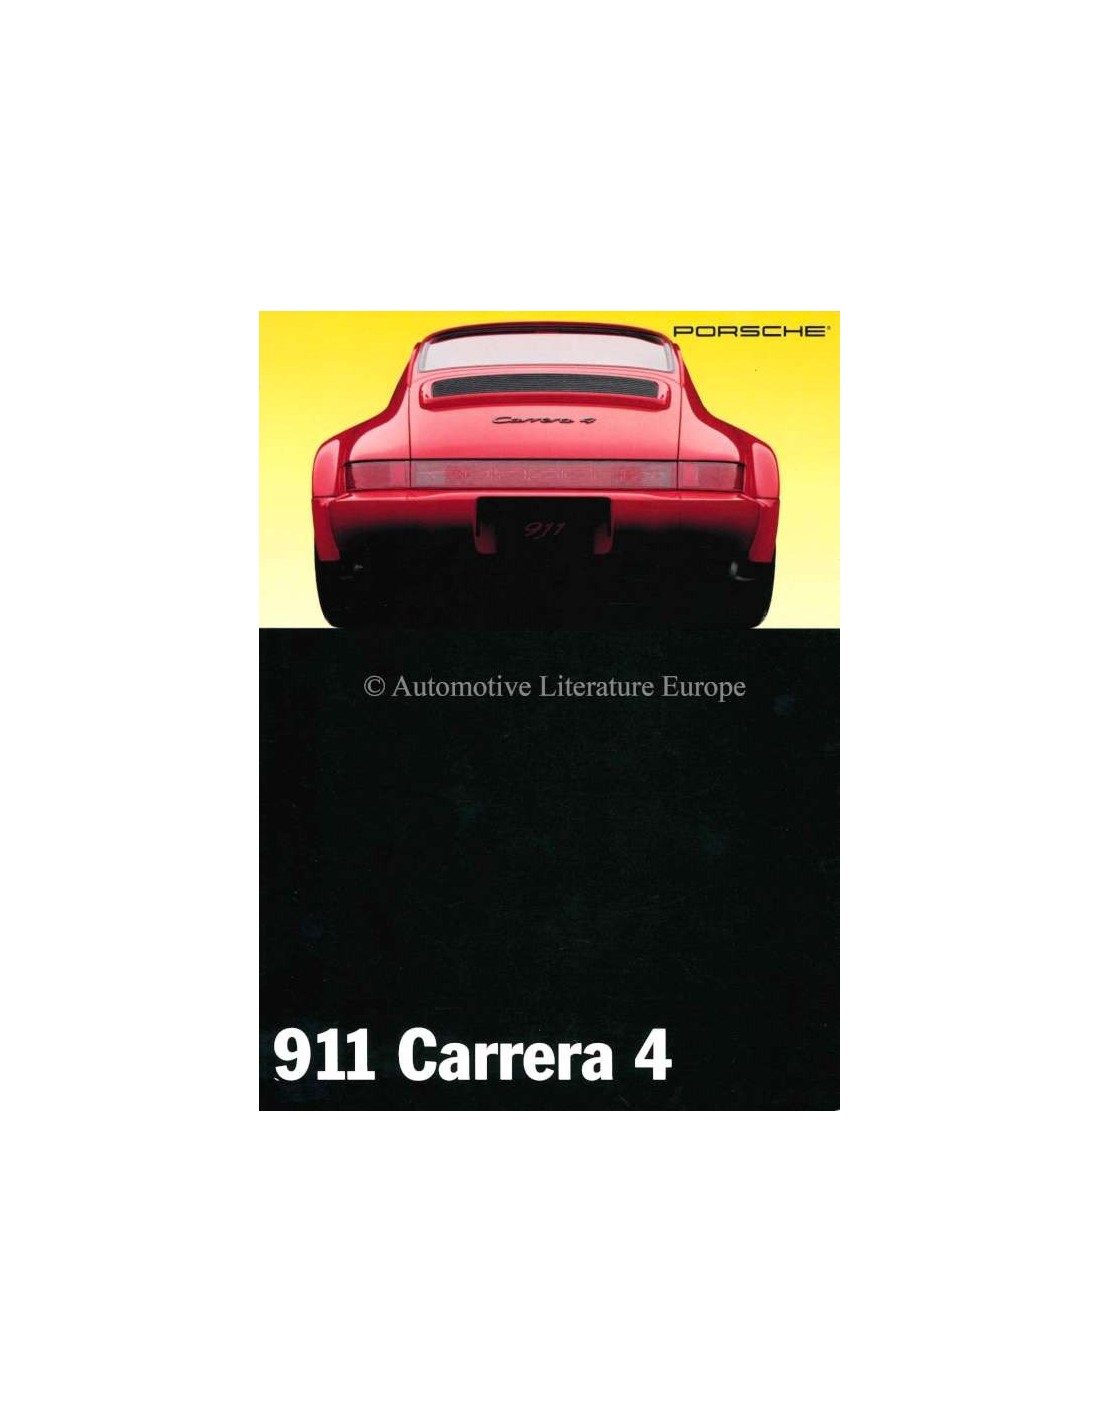 Porsche 911 30 Jahre Carrera 4 Turbo-Look Prospekt 1993 Autoprospekt brochure 